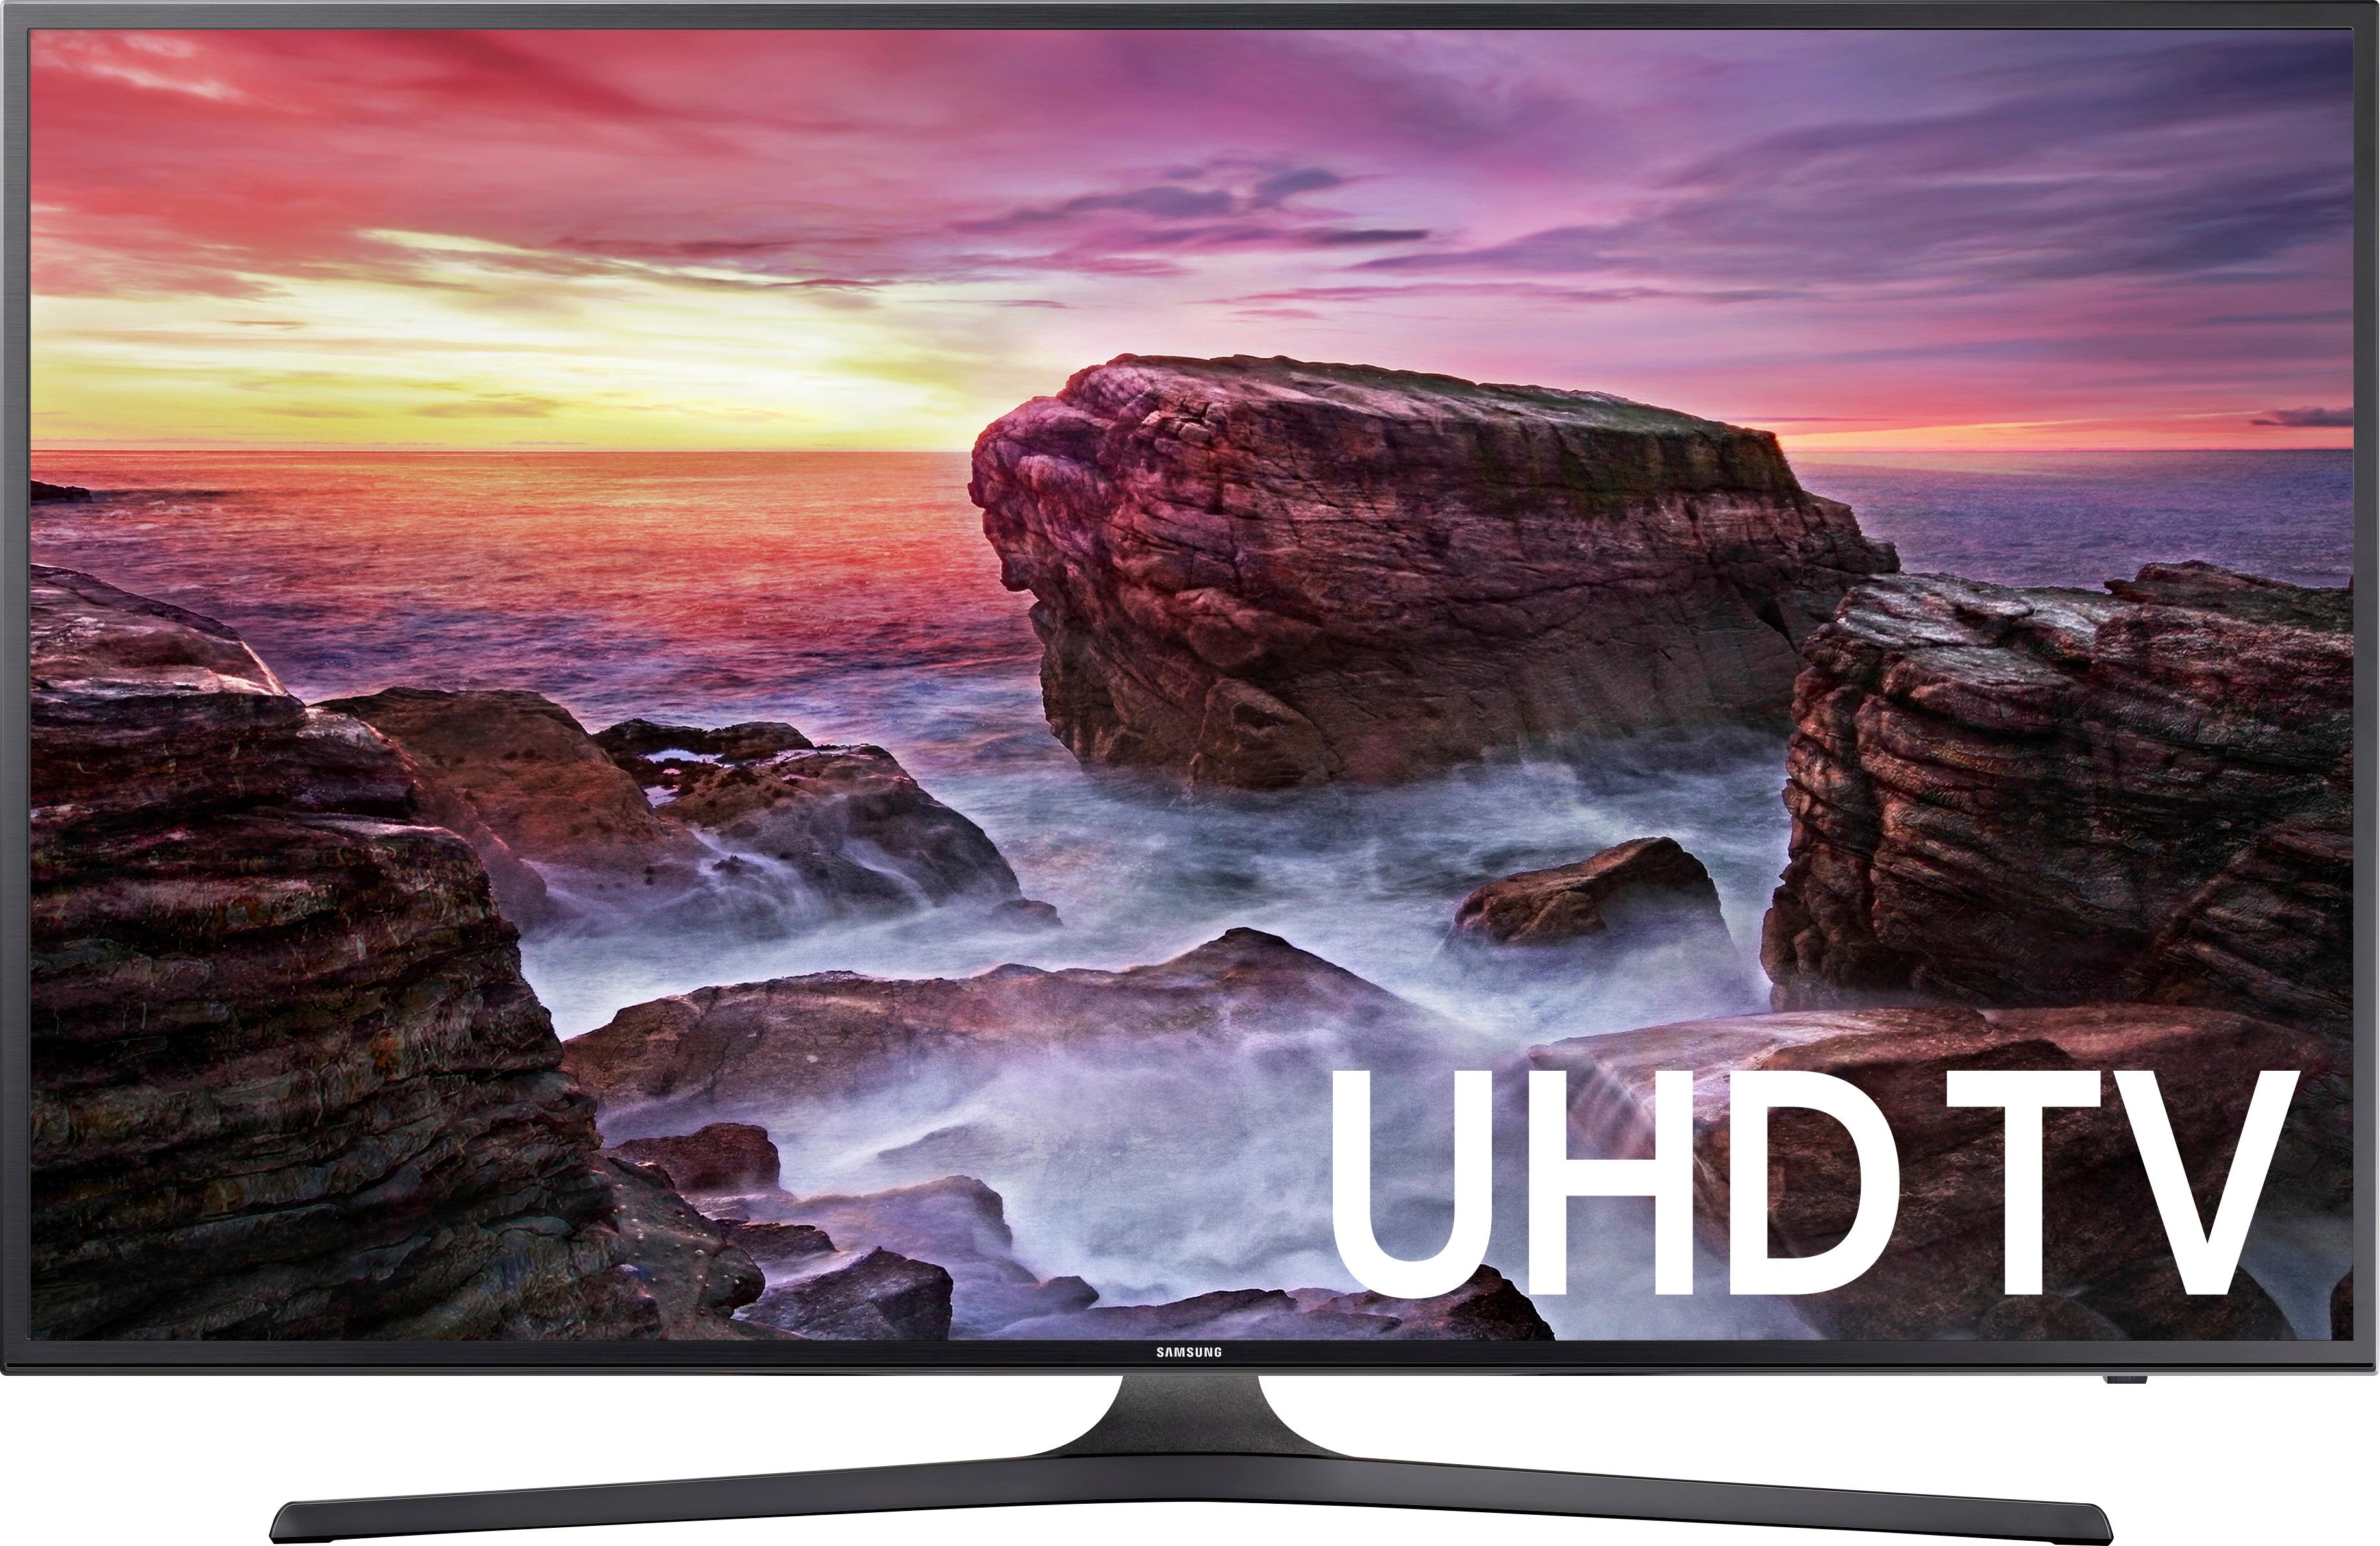 Samsung 40" Class LED MU6290 Series 2160p Smart 4K Ultra HD TV with HDR